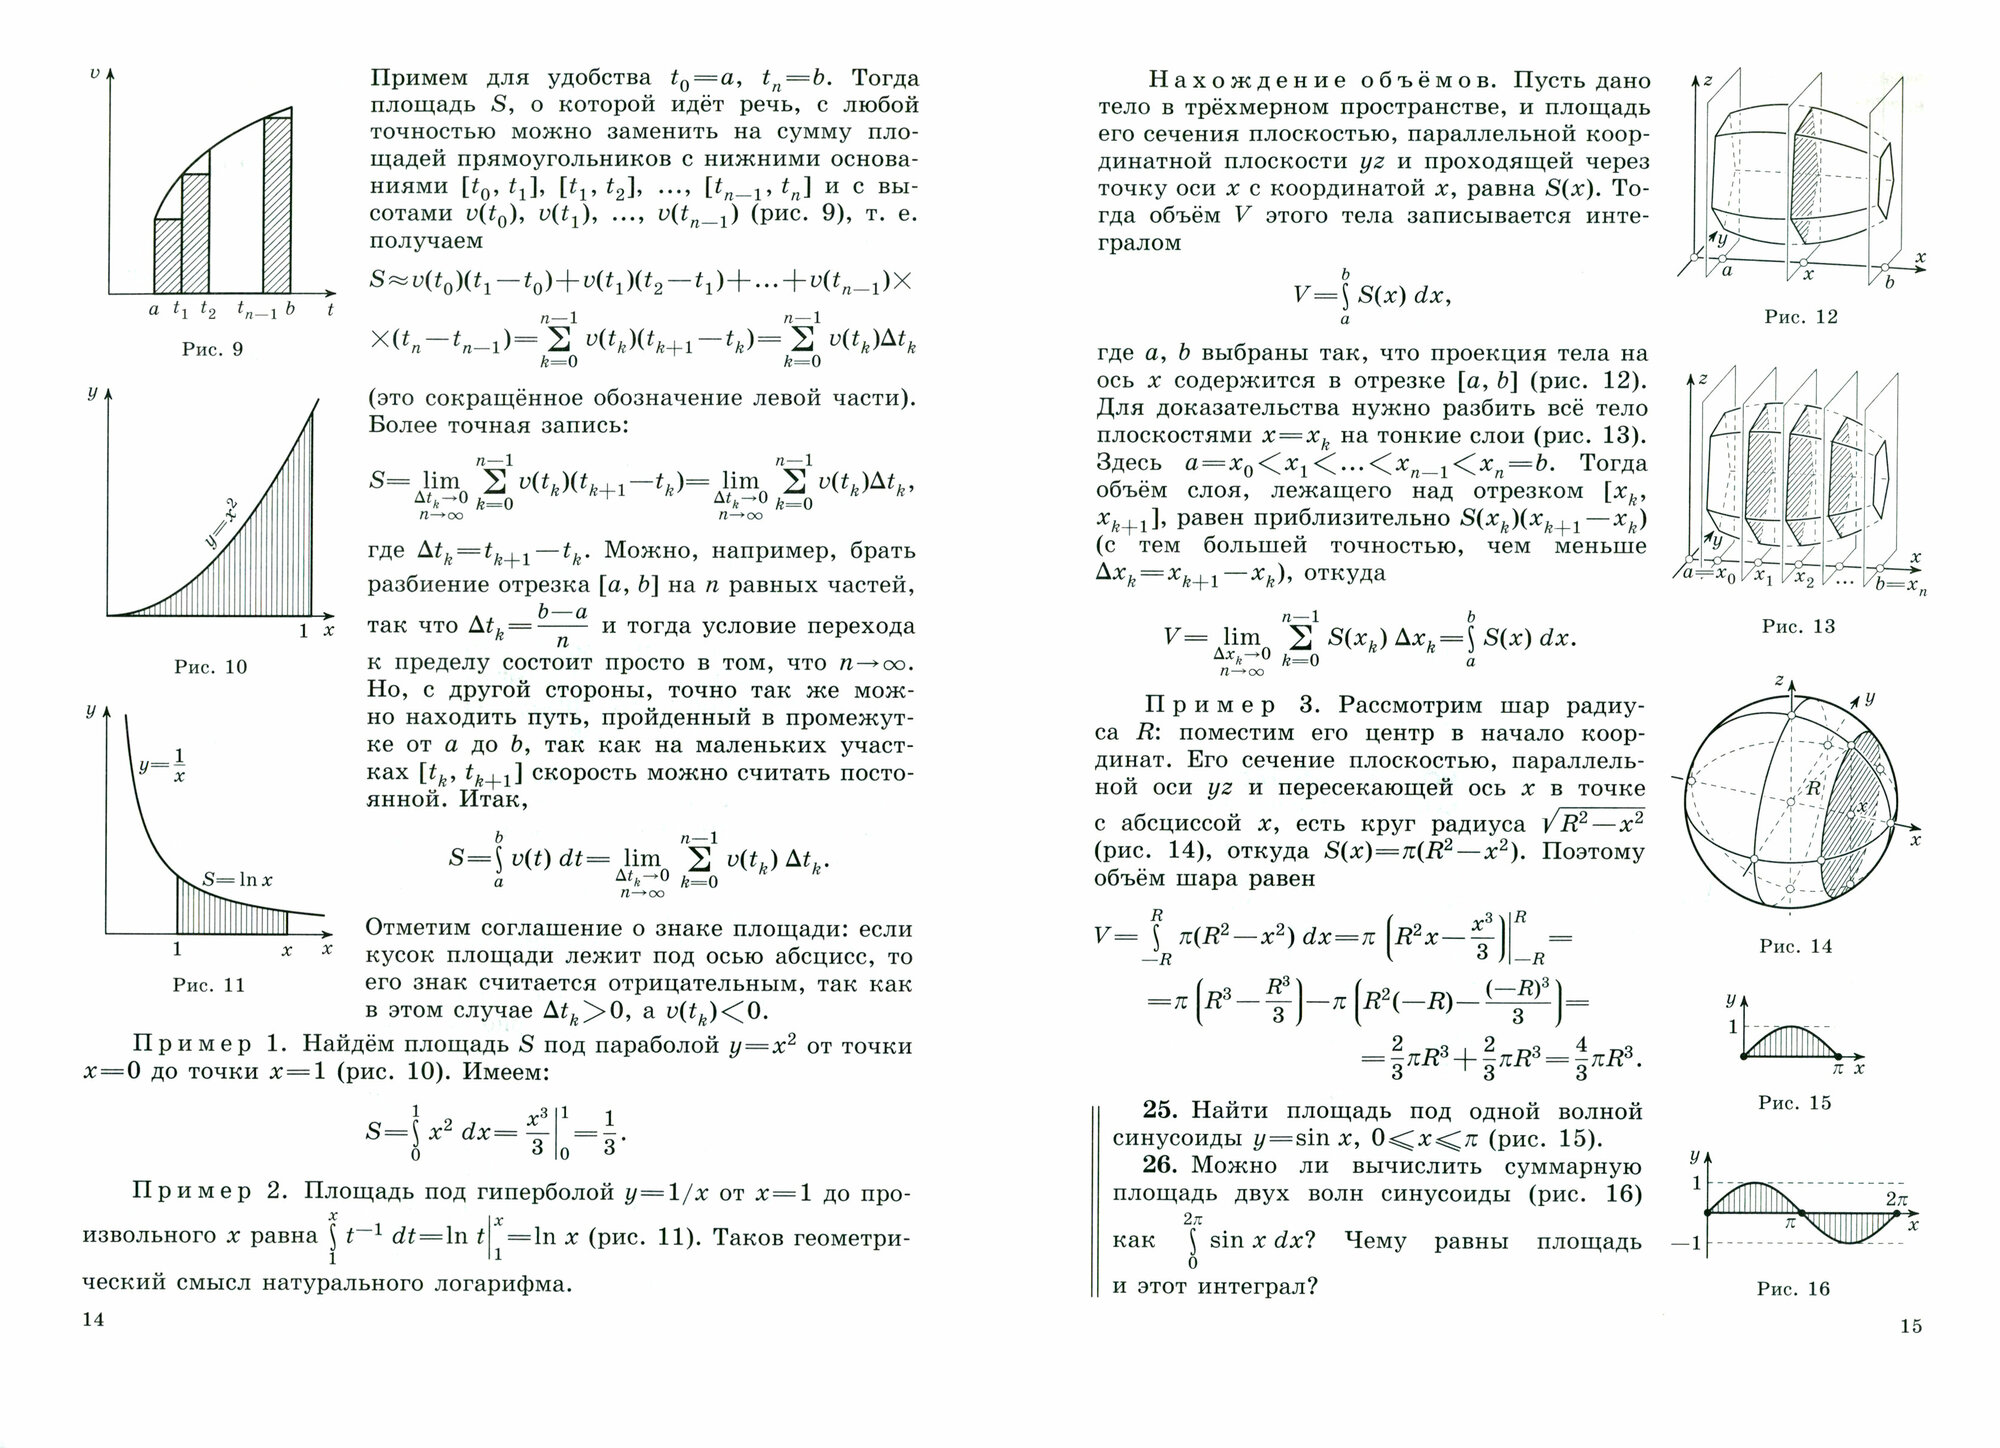 Математический анализ для решения физических задач - фото №3